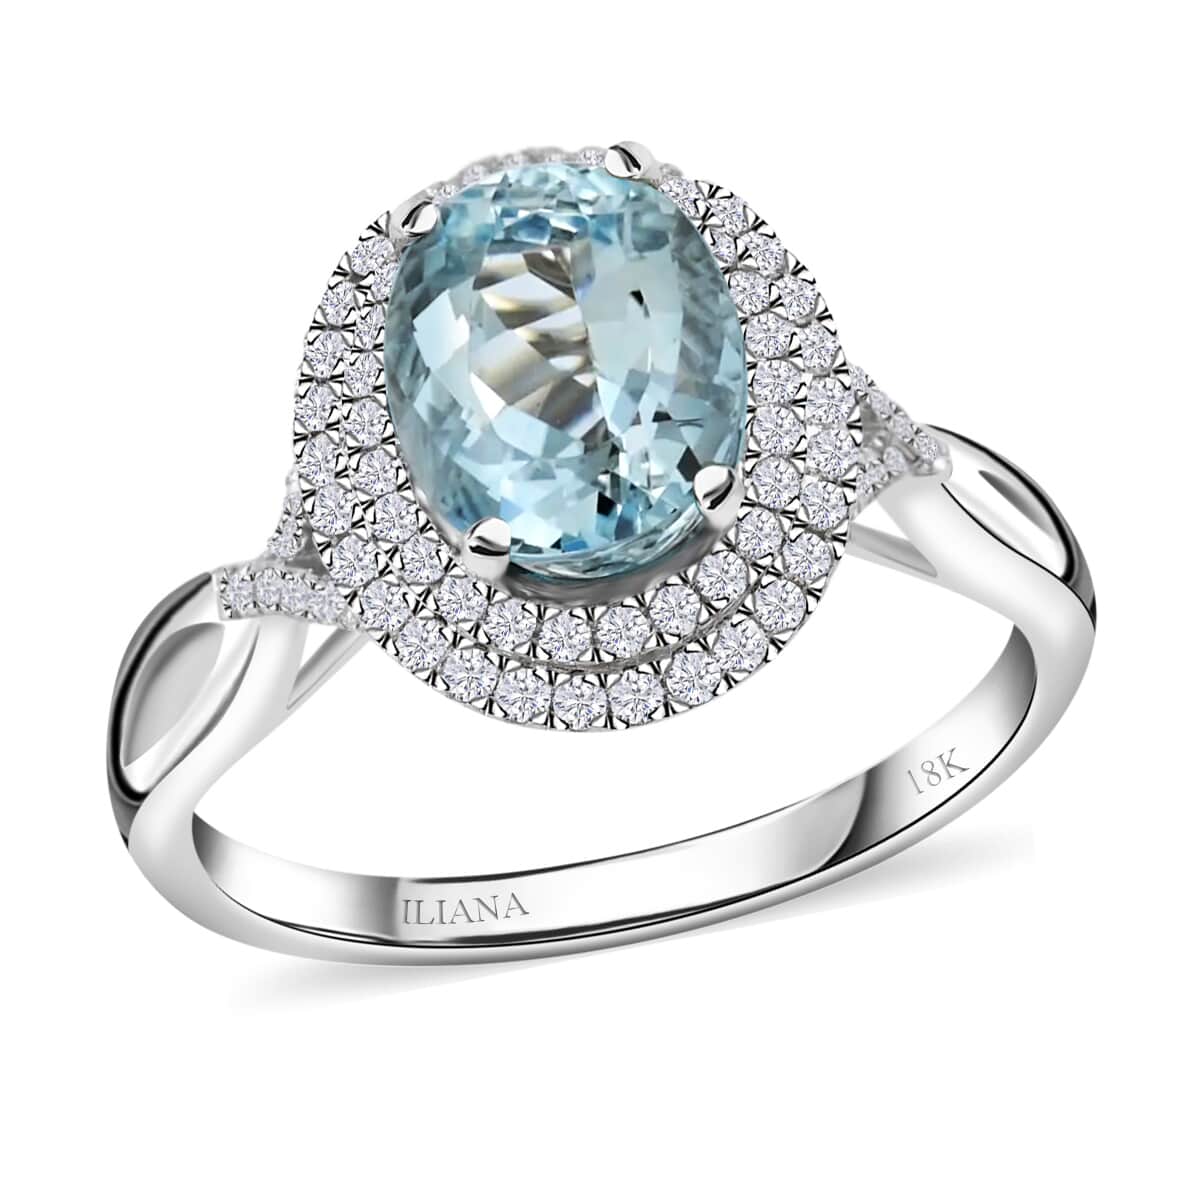 Iliana 18K White Gold AAA Santa Maria Aquamarine and G-H SI Diamond Halo Ring (Size 7.0) 5 Grams 2.15 ctw image number 0